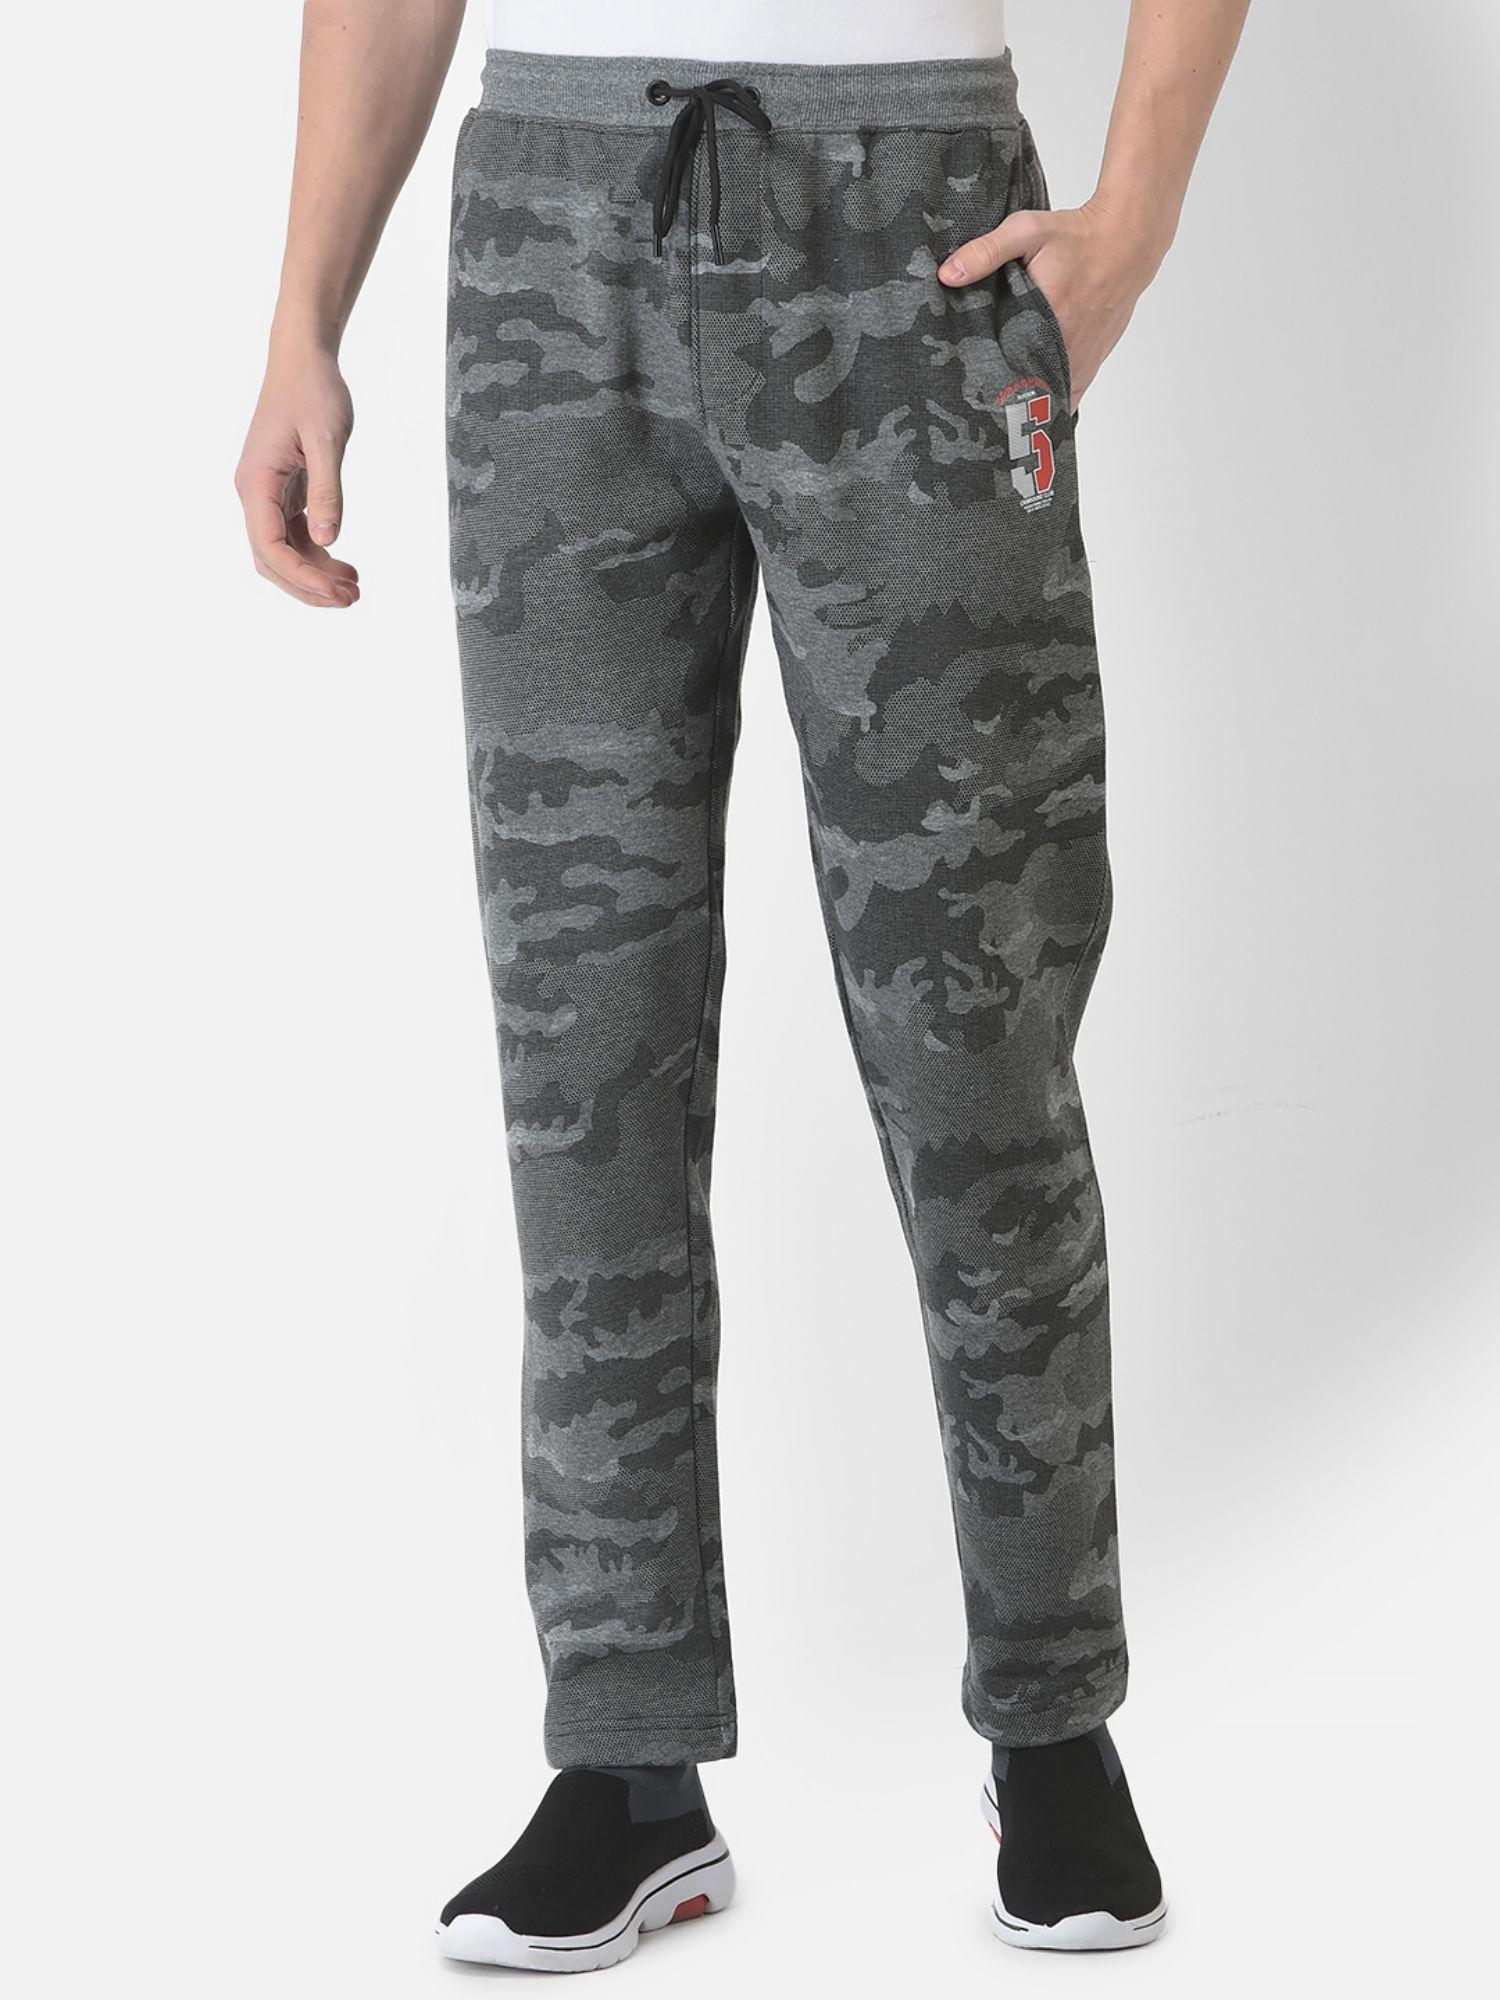 men-grey-camouflage-print-track-pants